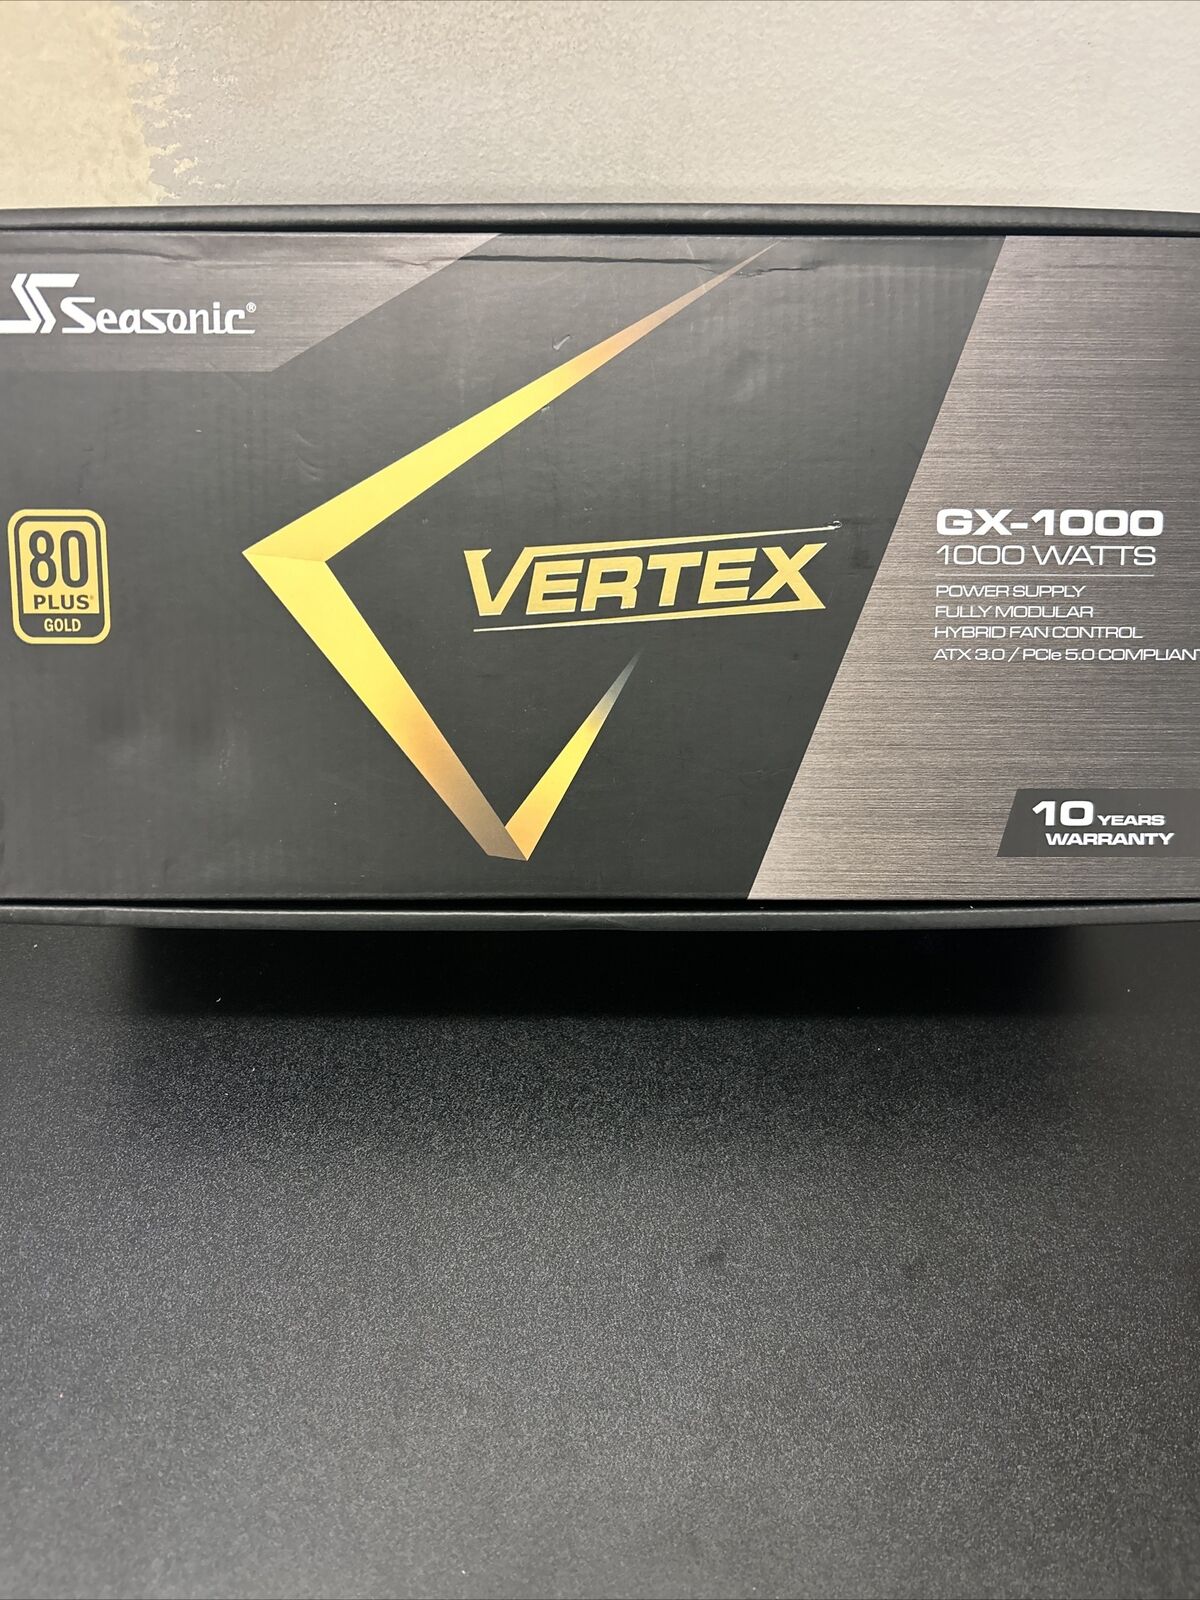 Seasonic VERTEX 1000W 80+ Gold Full Modular Power Supply, ATX 3.0 & PCIe 5.0 PSU